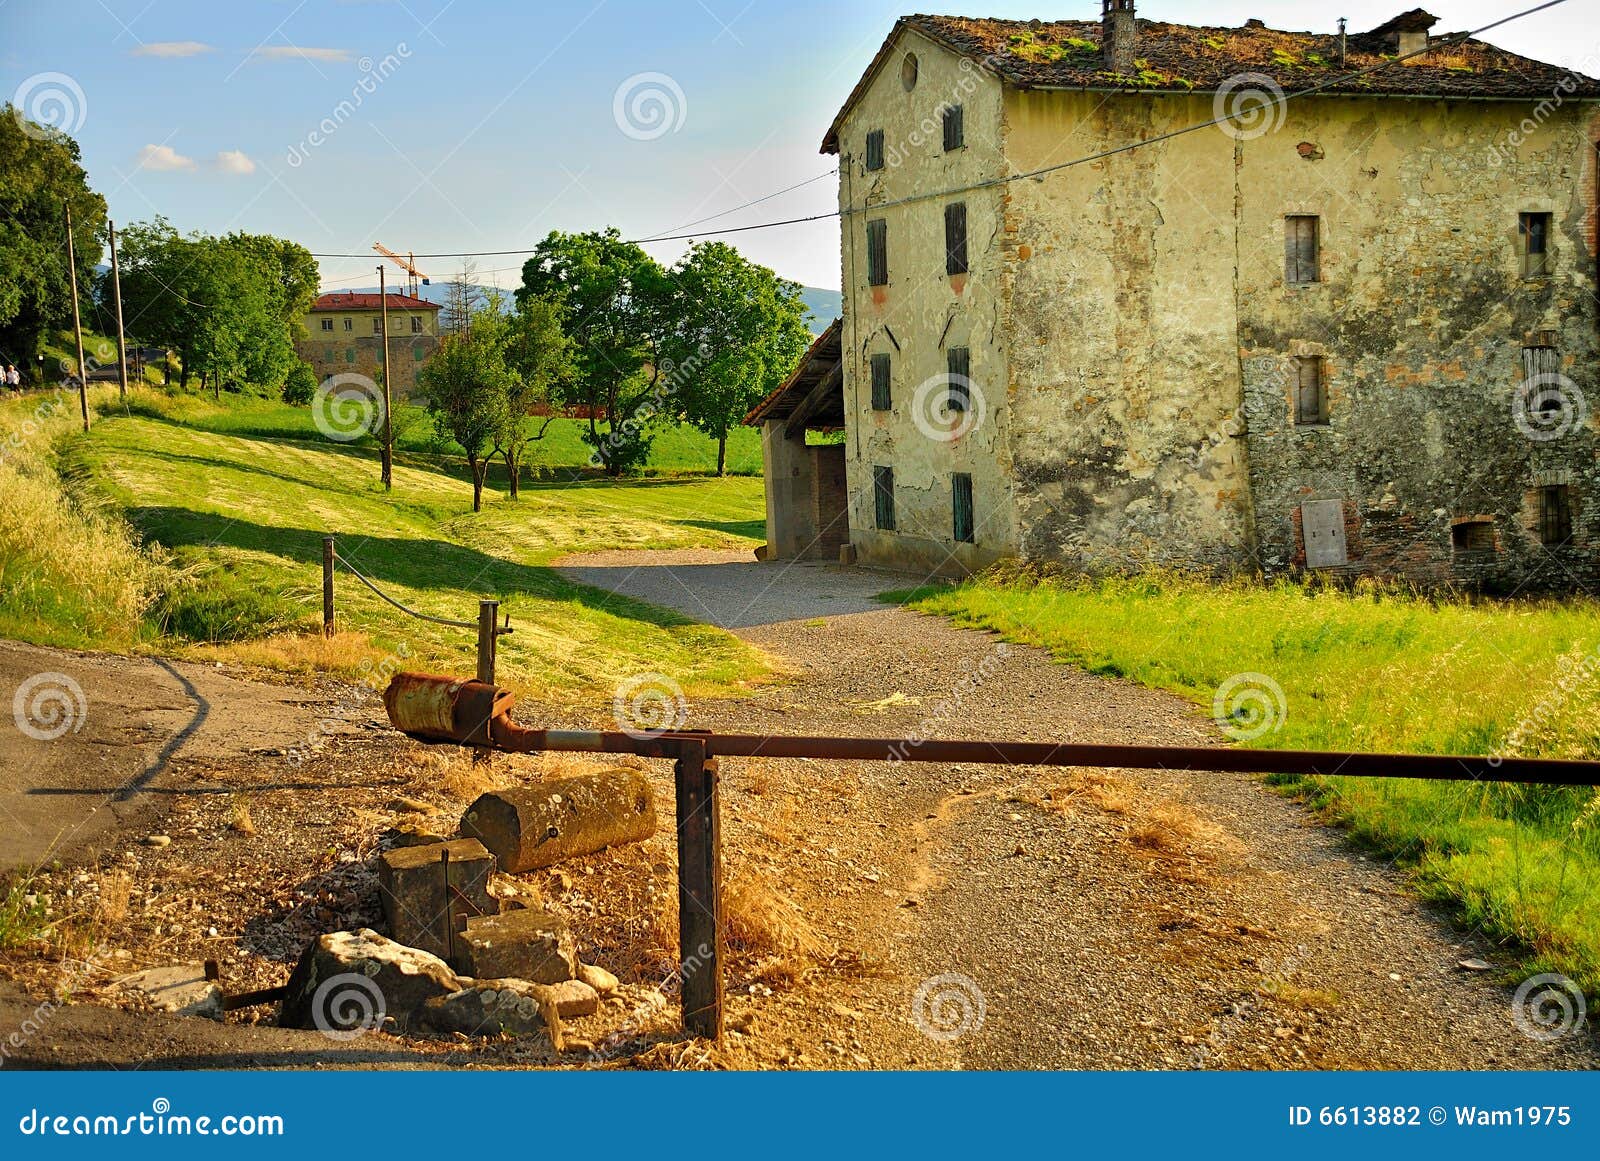 italian countryside